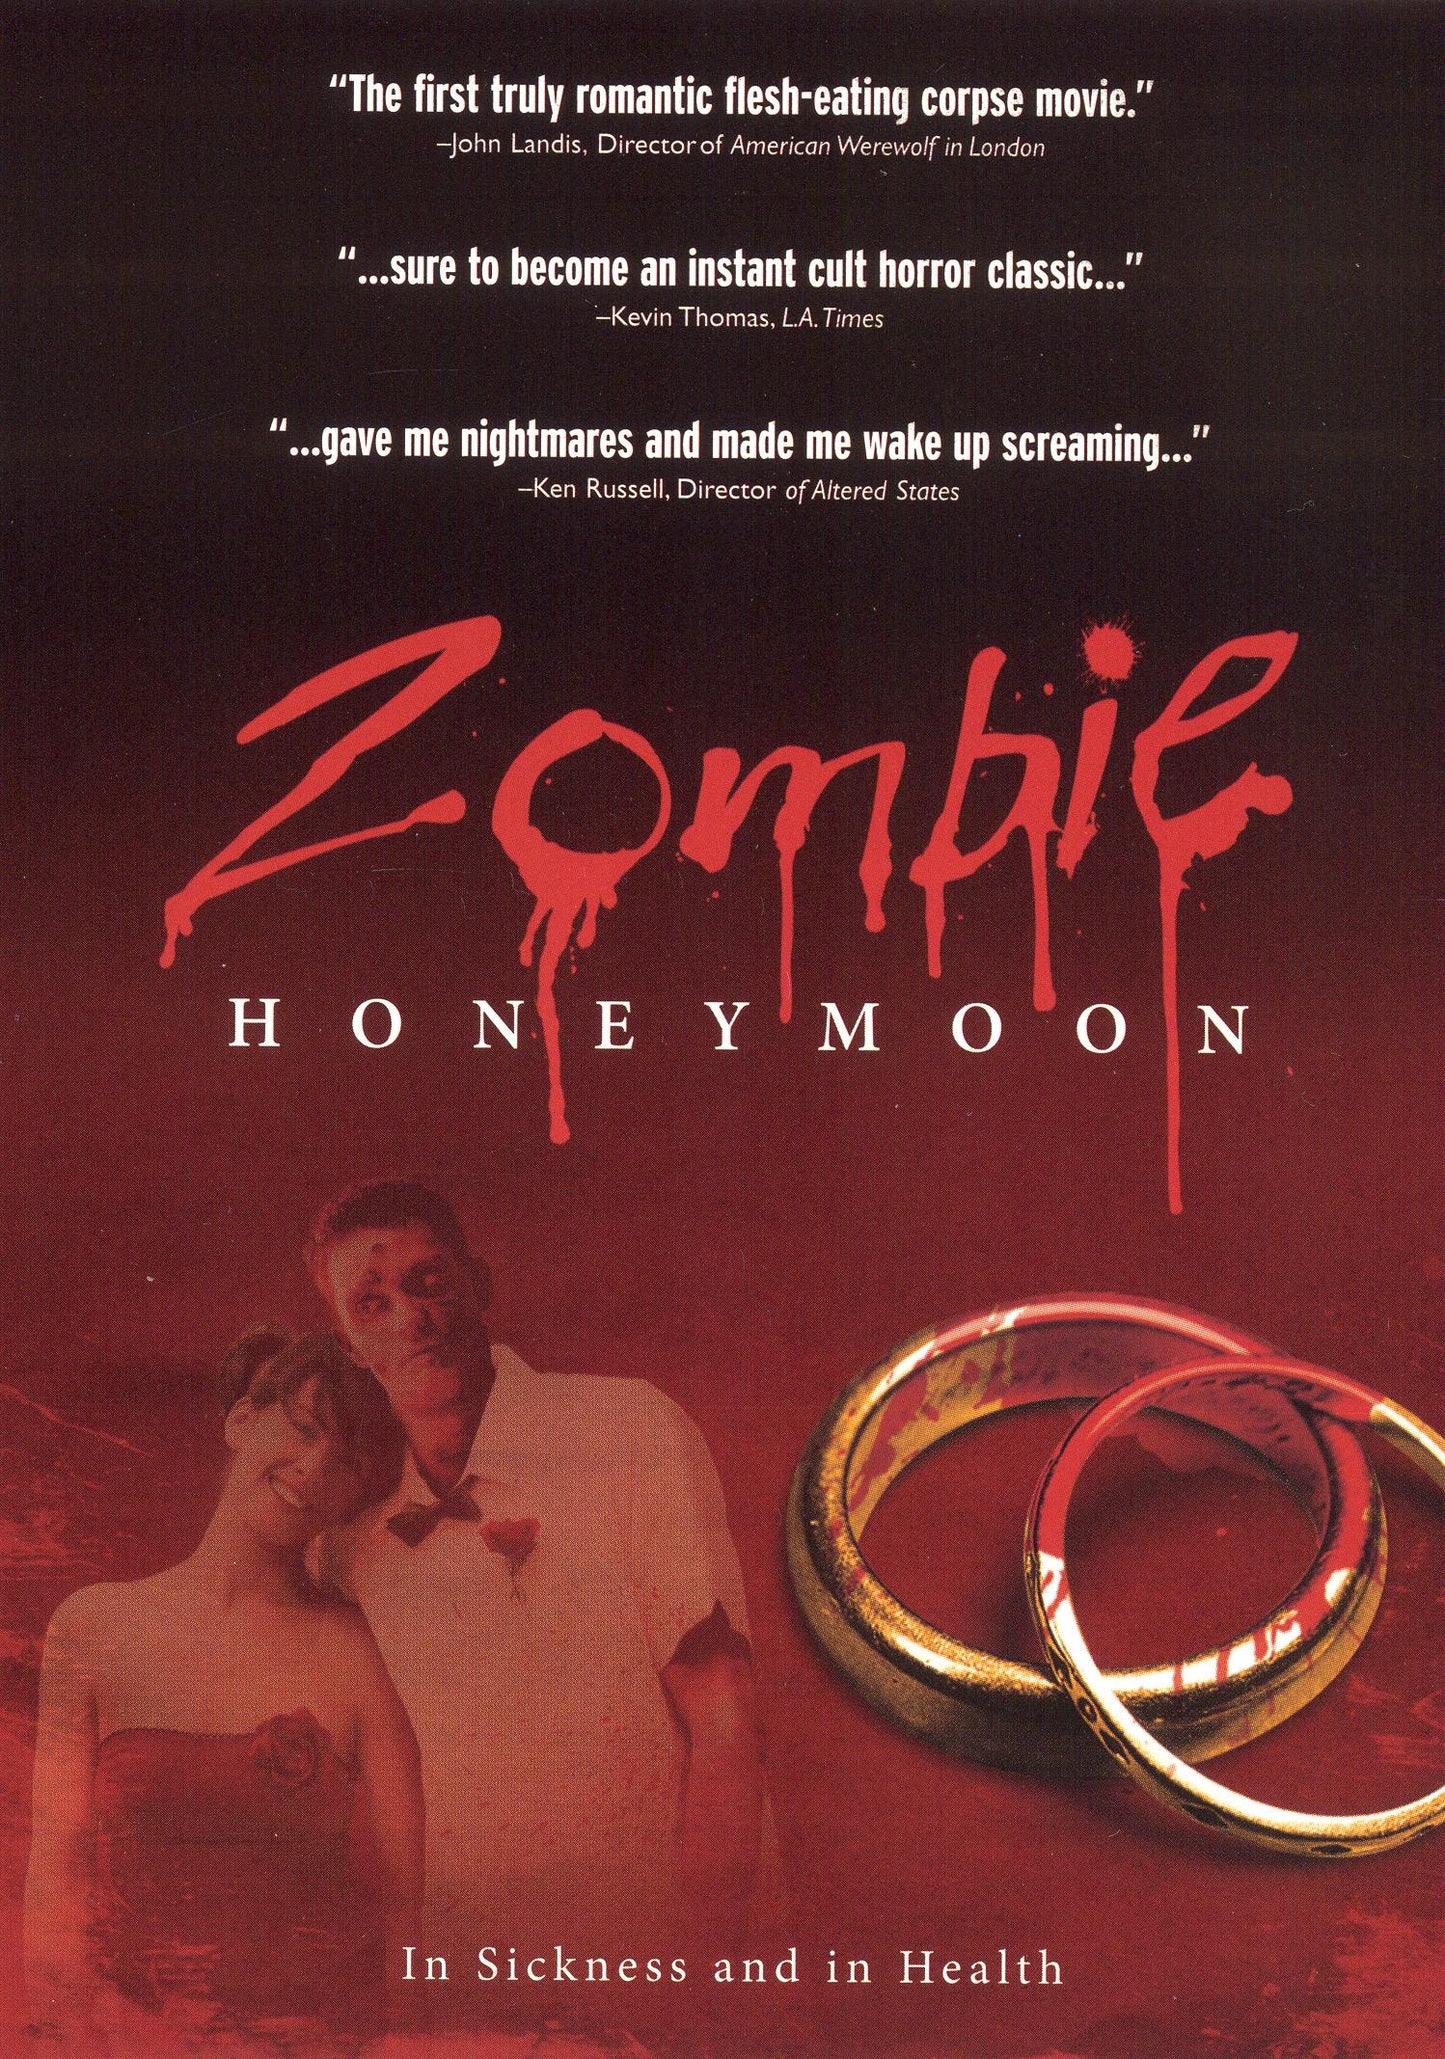 Zombie Honeymoon cover art